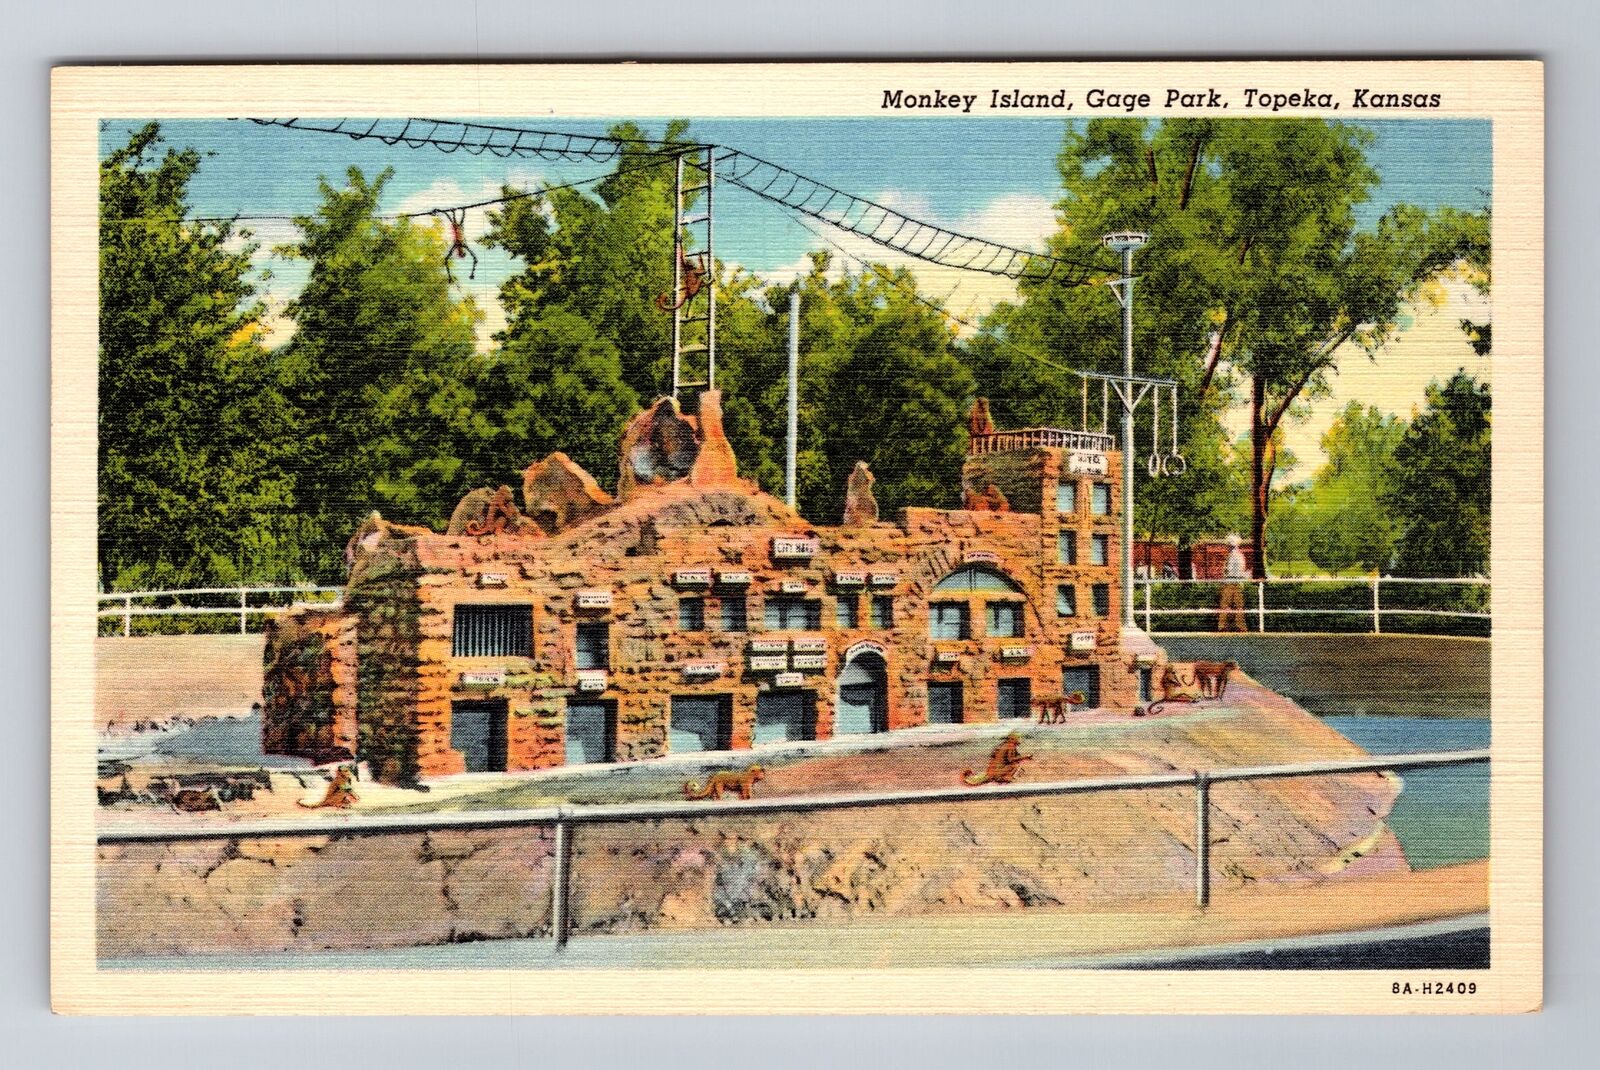 Topeka KS-Kansas, Monkey Island, Gage Park, Antique, Vintage Souvenir Postcard